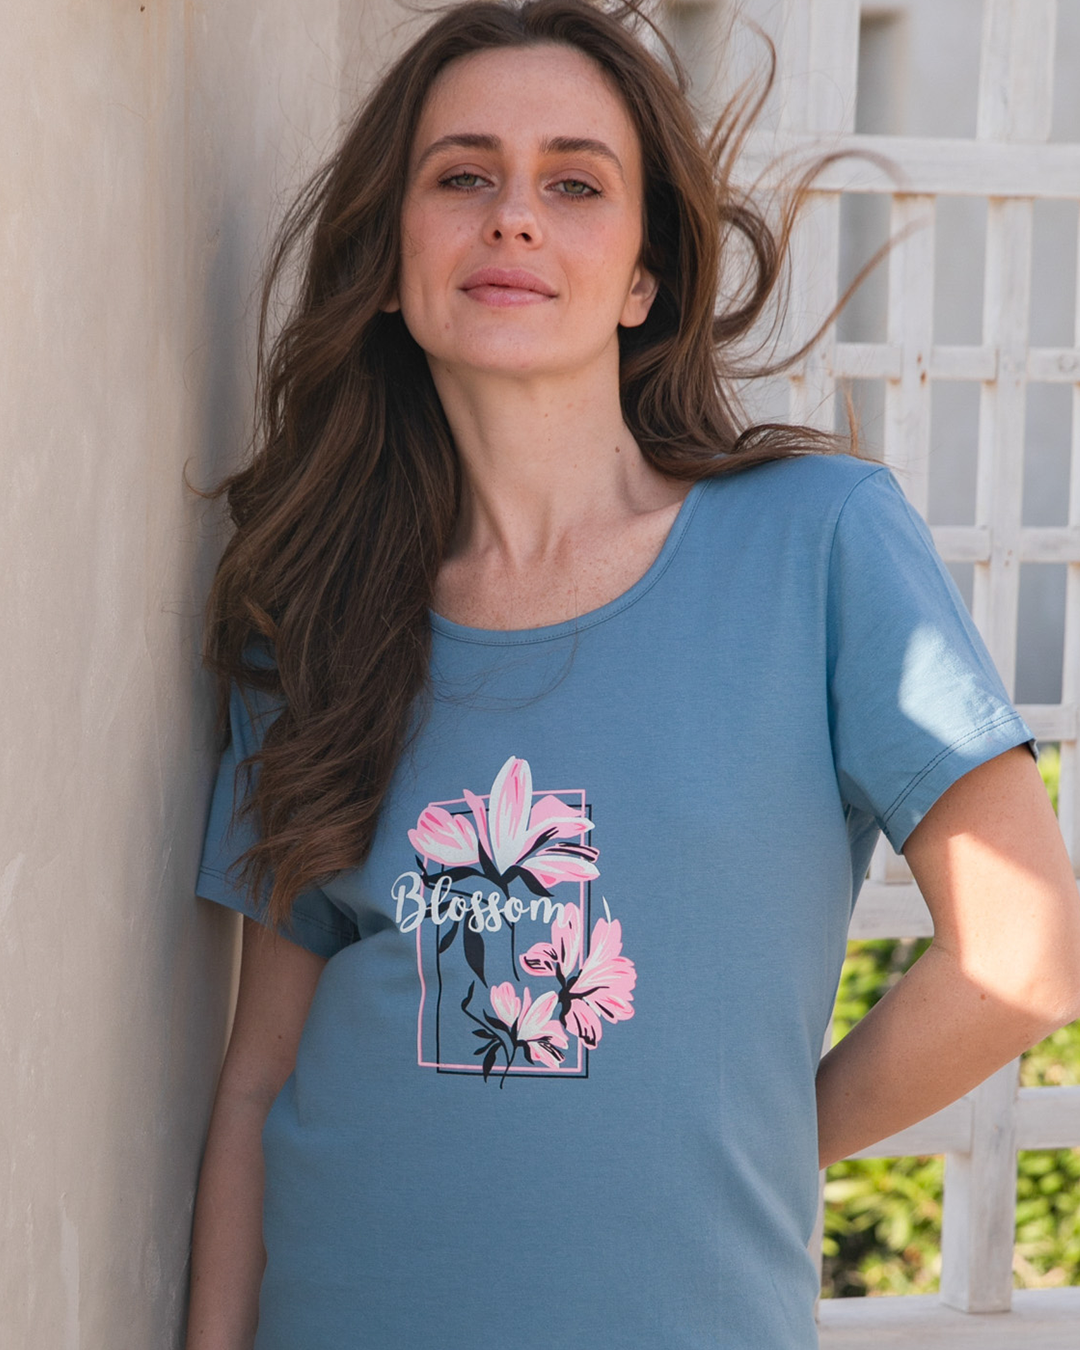 Blossom night shirt for women